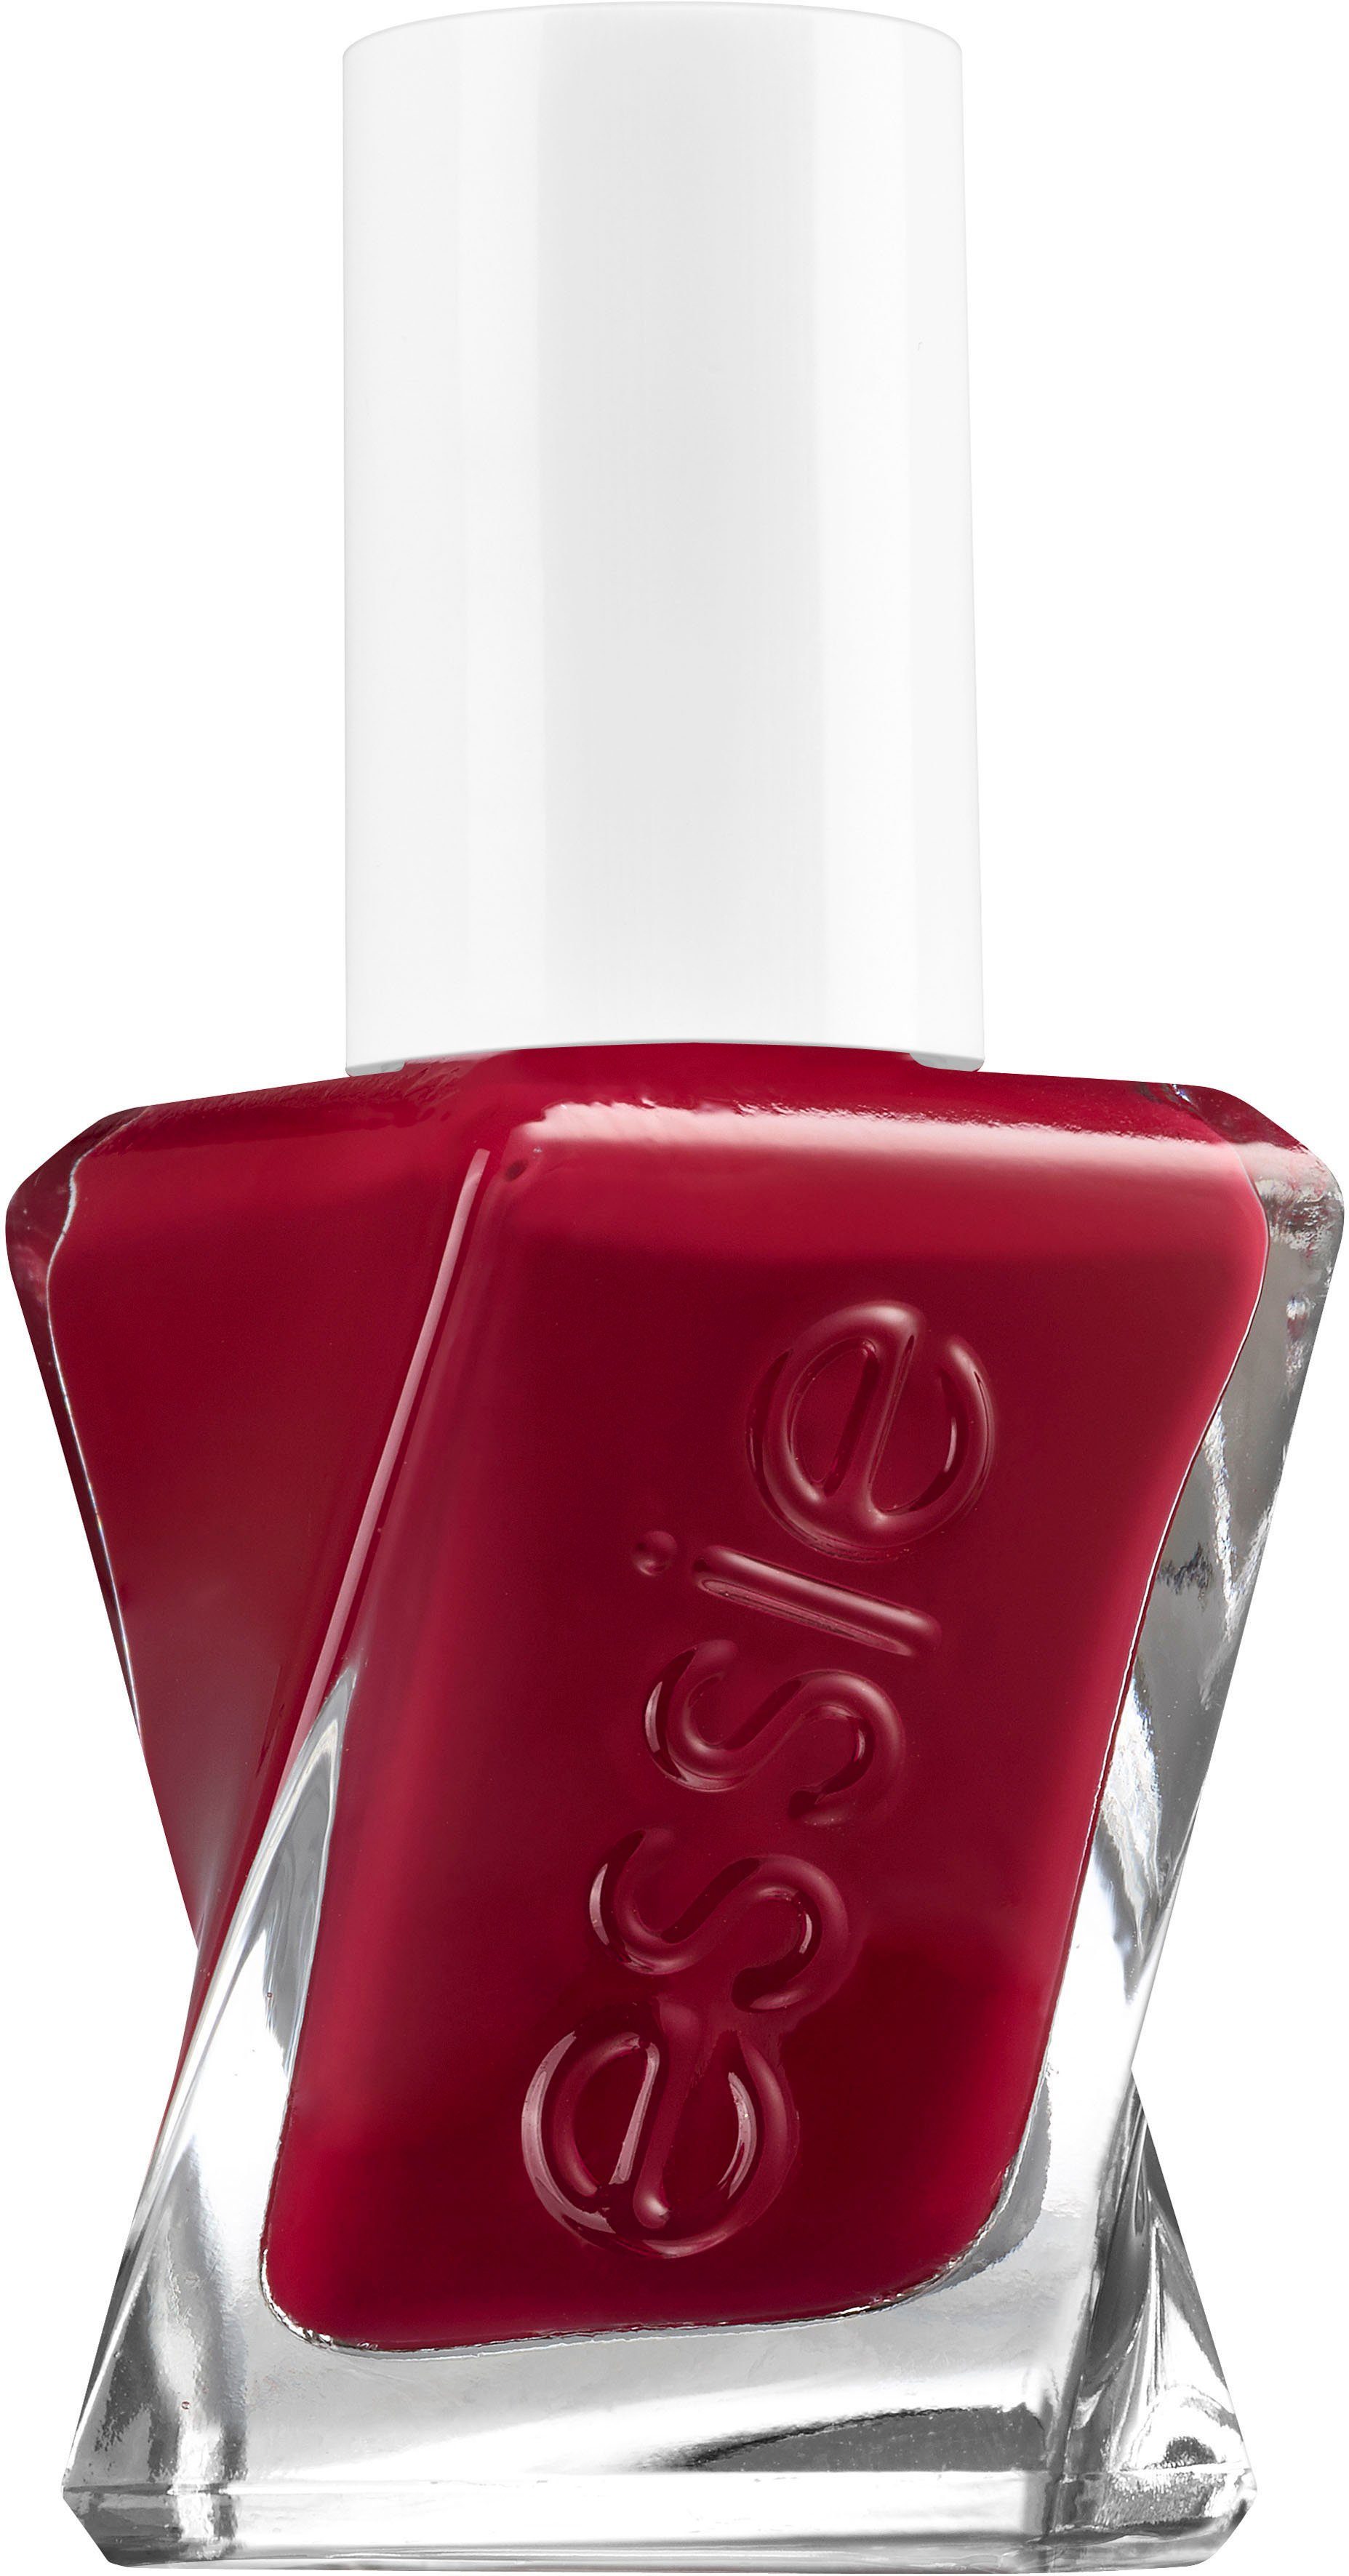 Günstige Marke essie Gel-Nagellack Gel red the gown Paint Nr. 509 Couture Rot